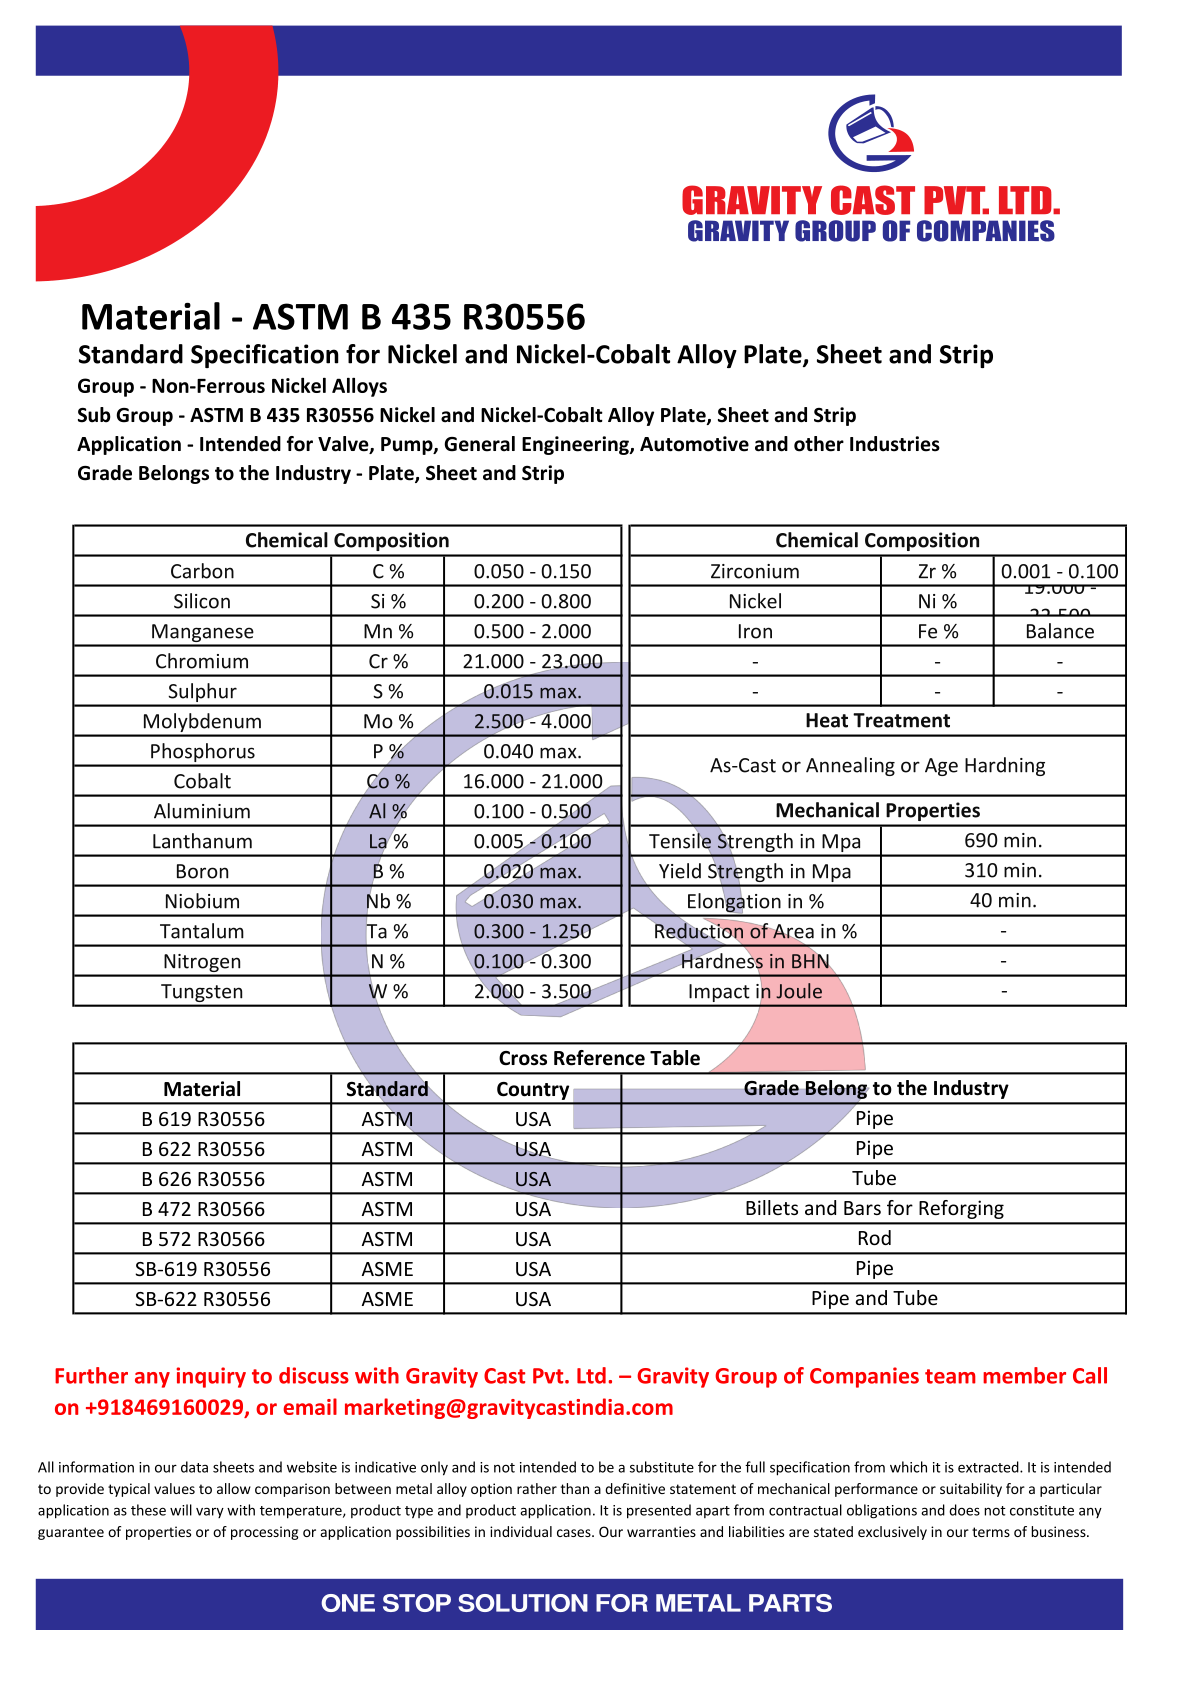 ASTM B 435 R30556.pdf